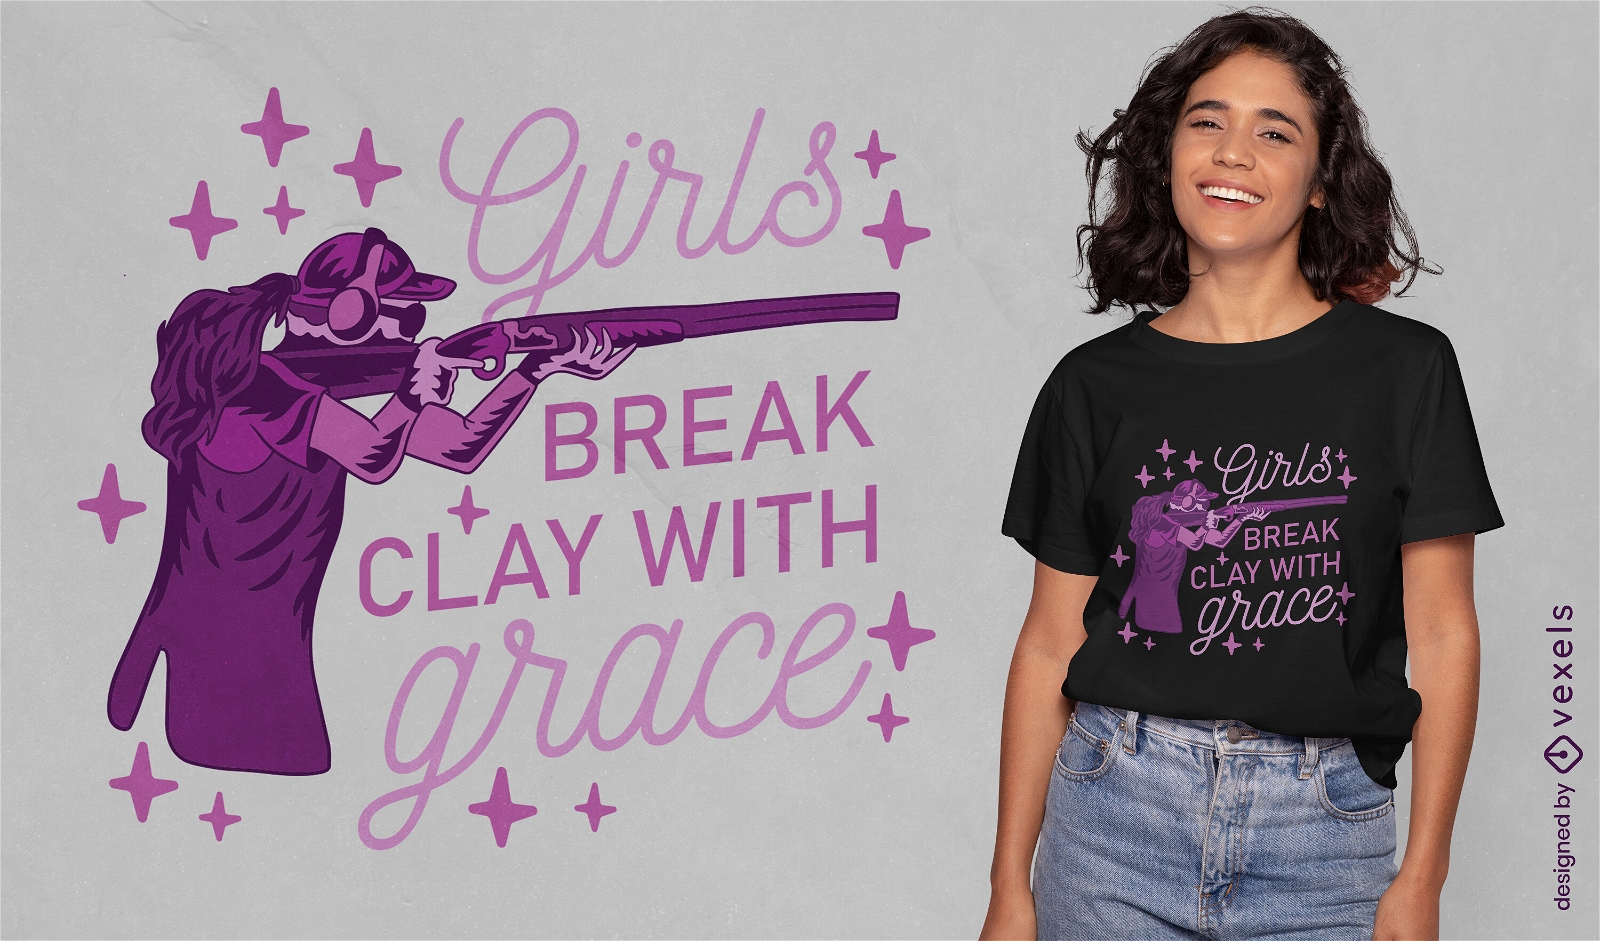 Clay shooting girl t-shirt design